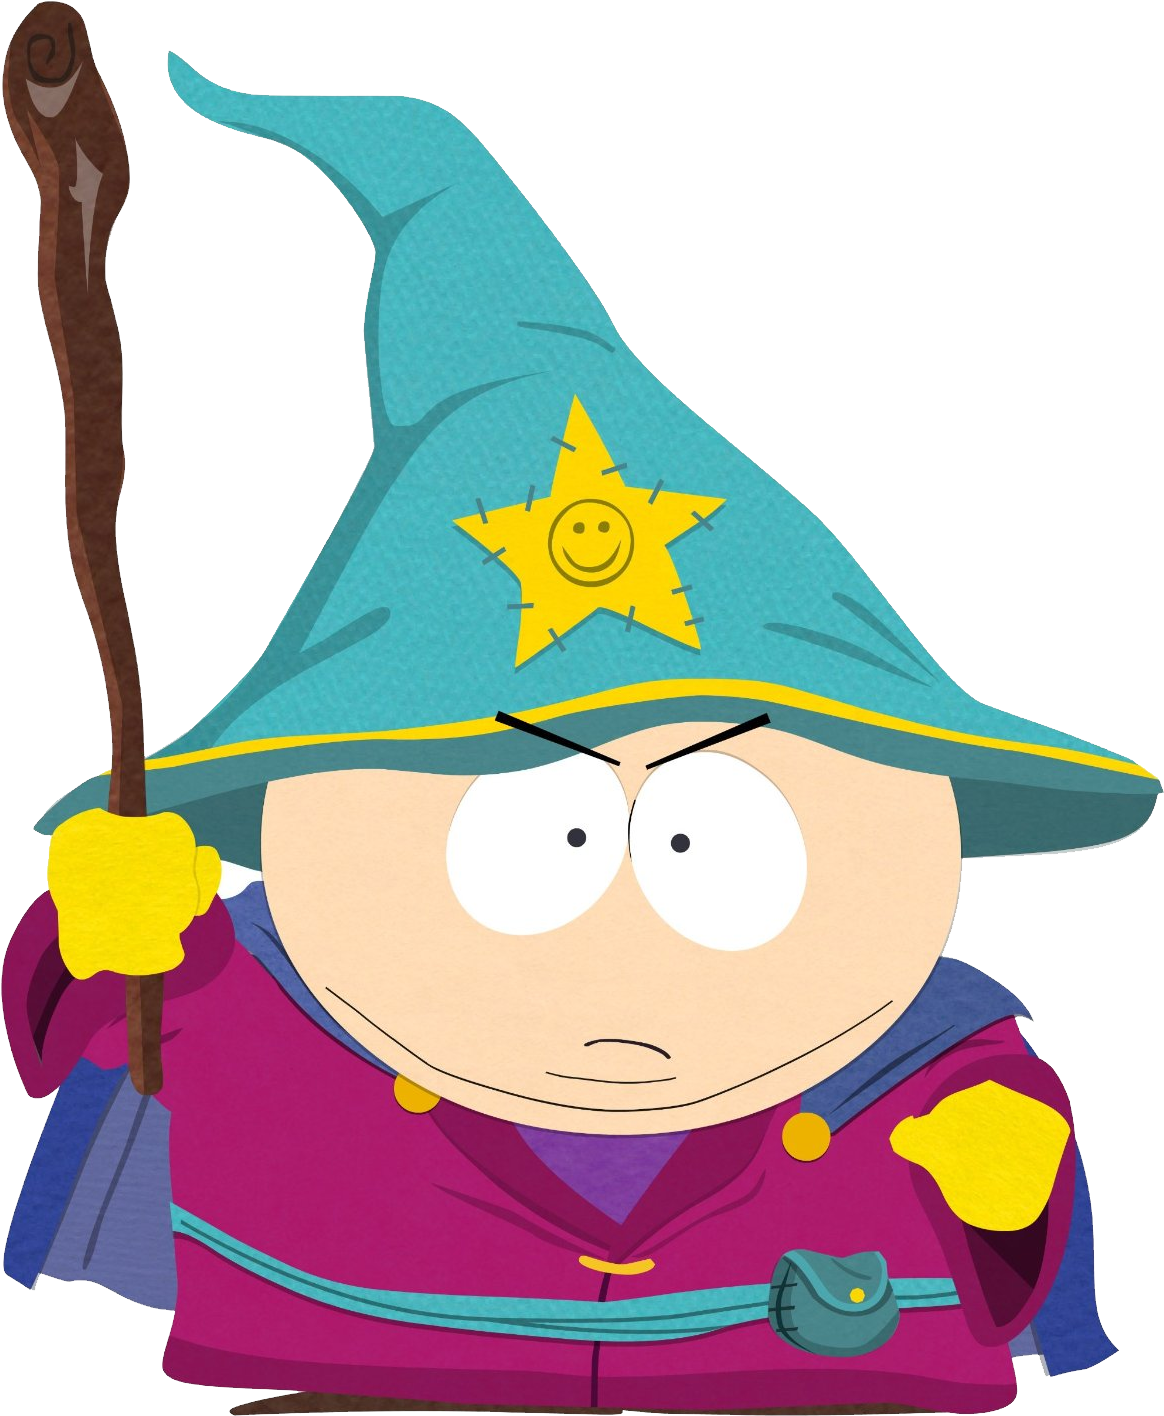 Cartman Stick Of Truth - South Park The Stick Of Truth Cartman (1500x1500)